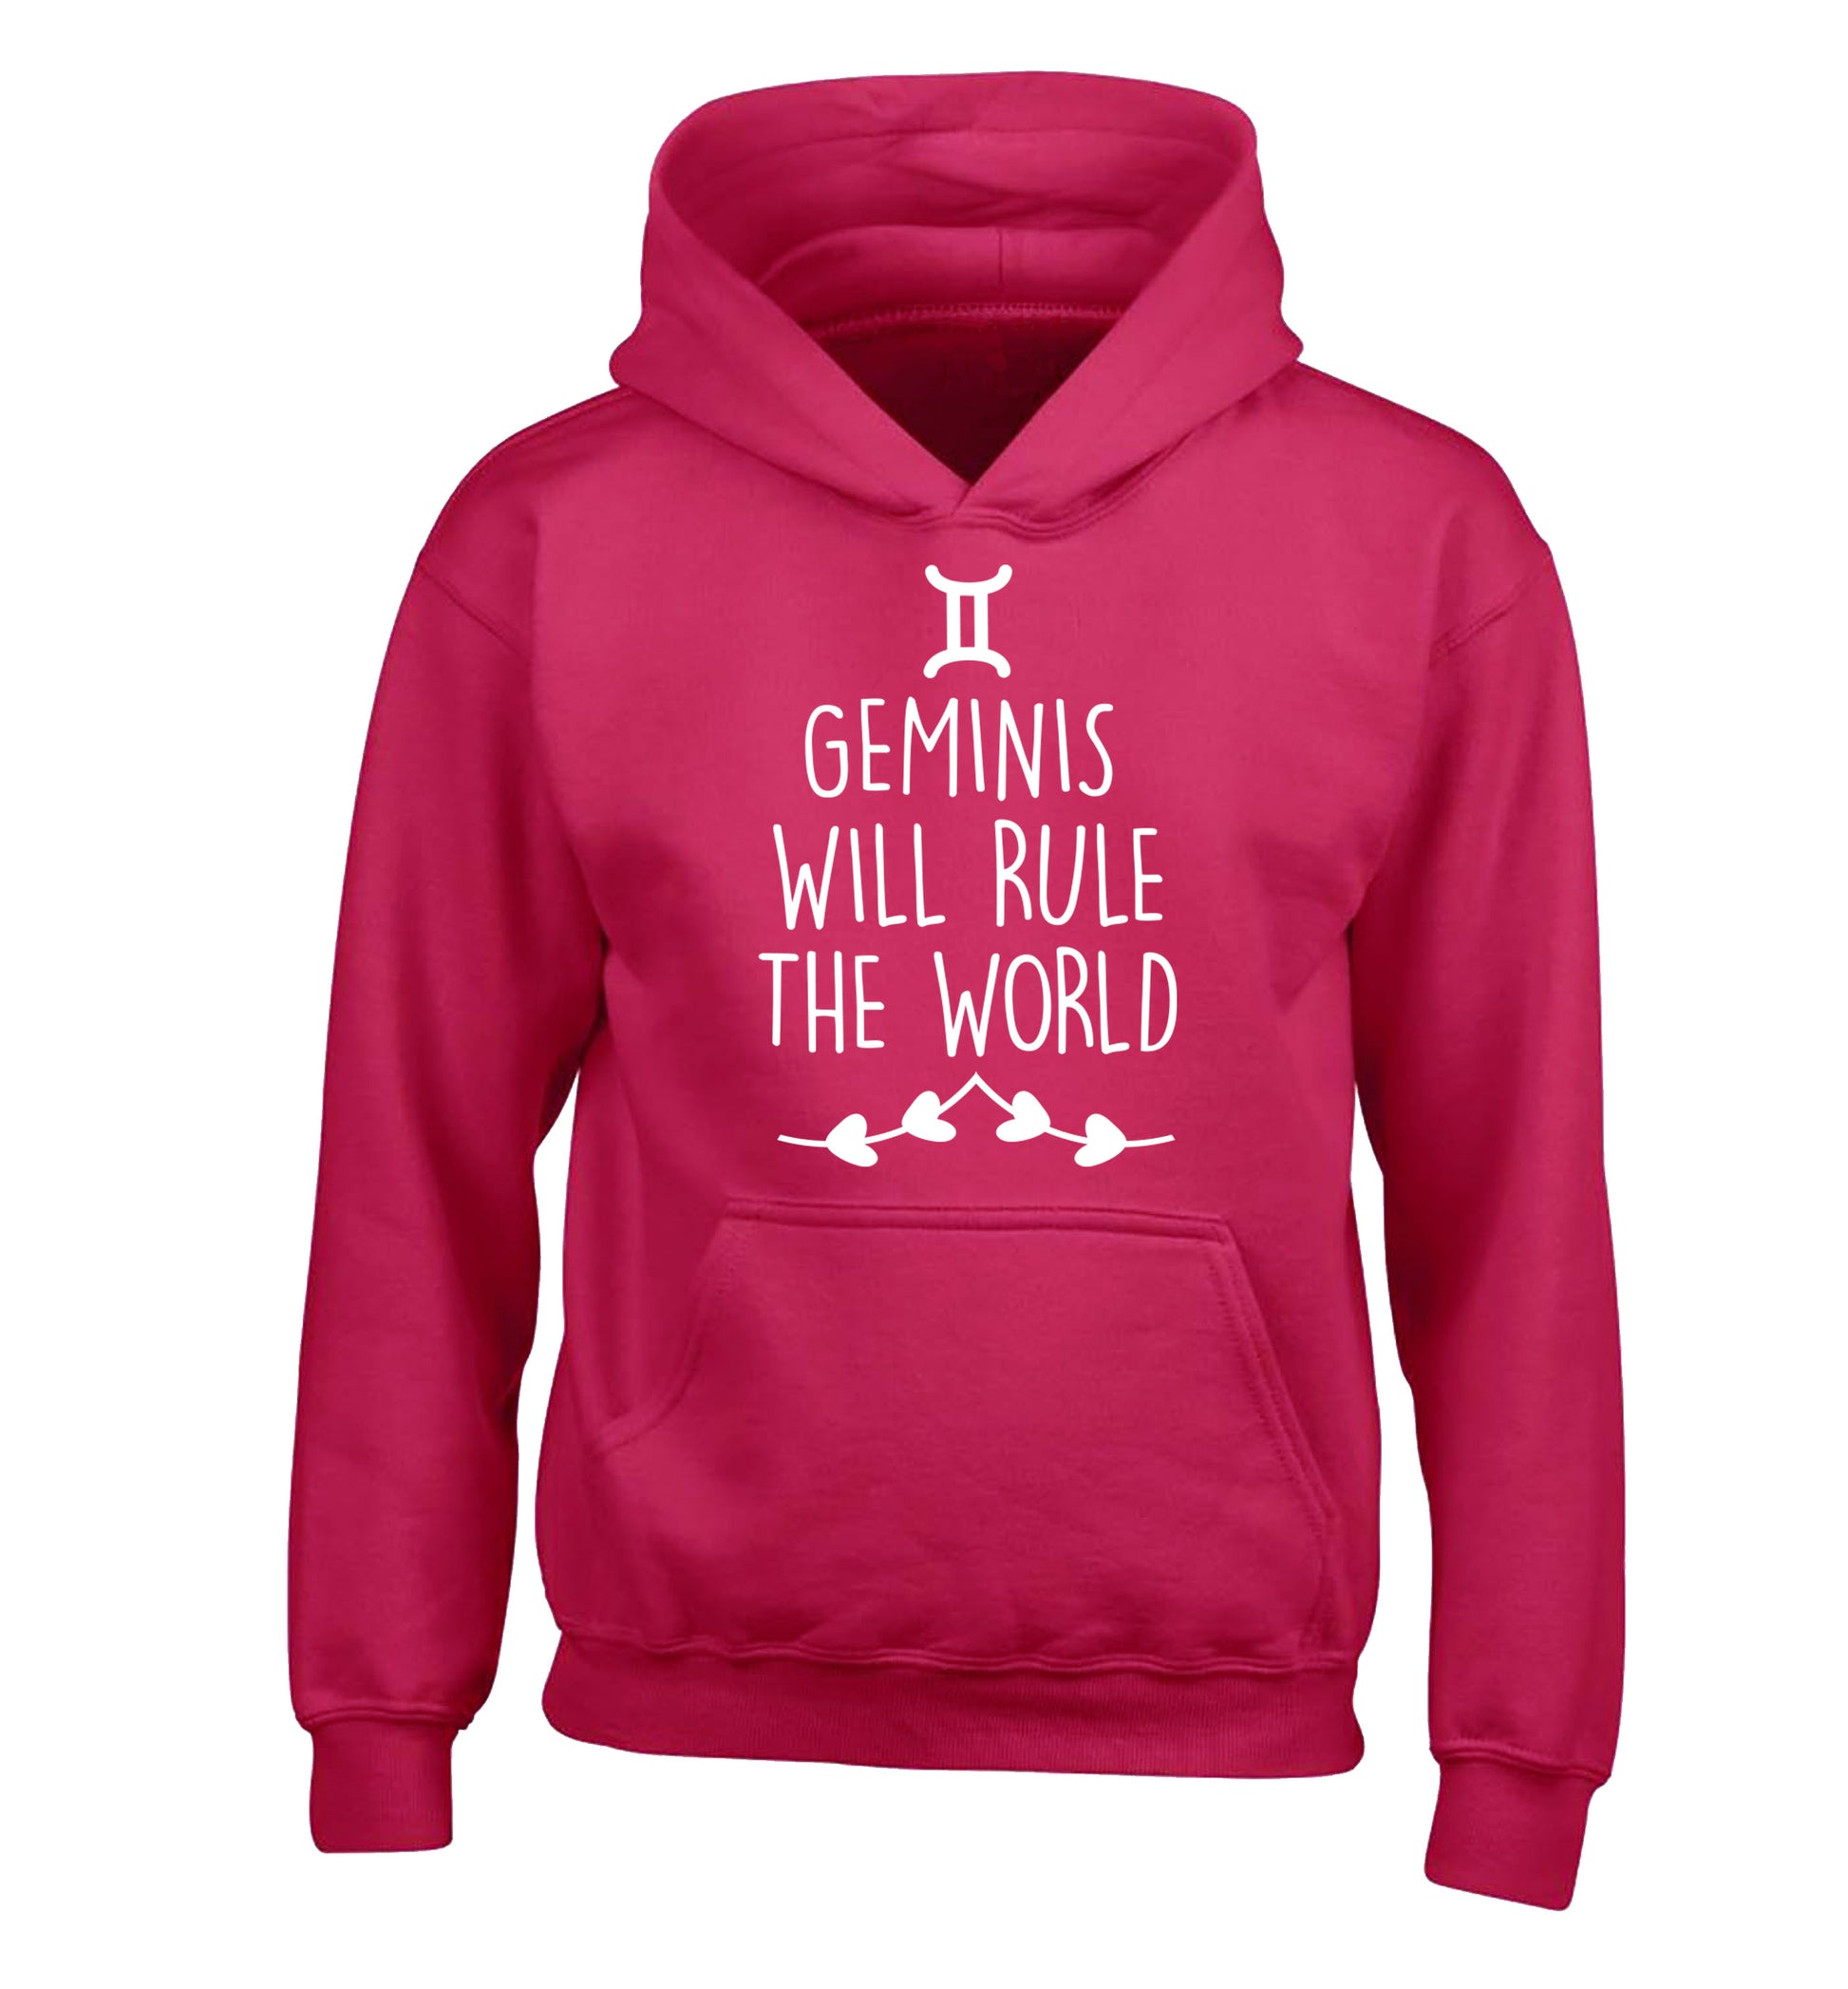 Geminis will rule the world children's pink hoodie 12-13 Years